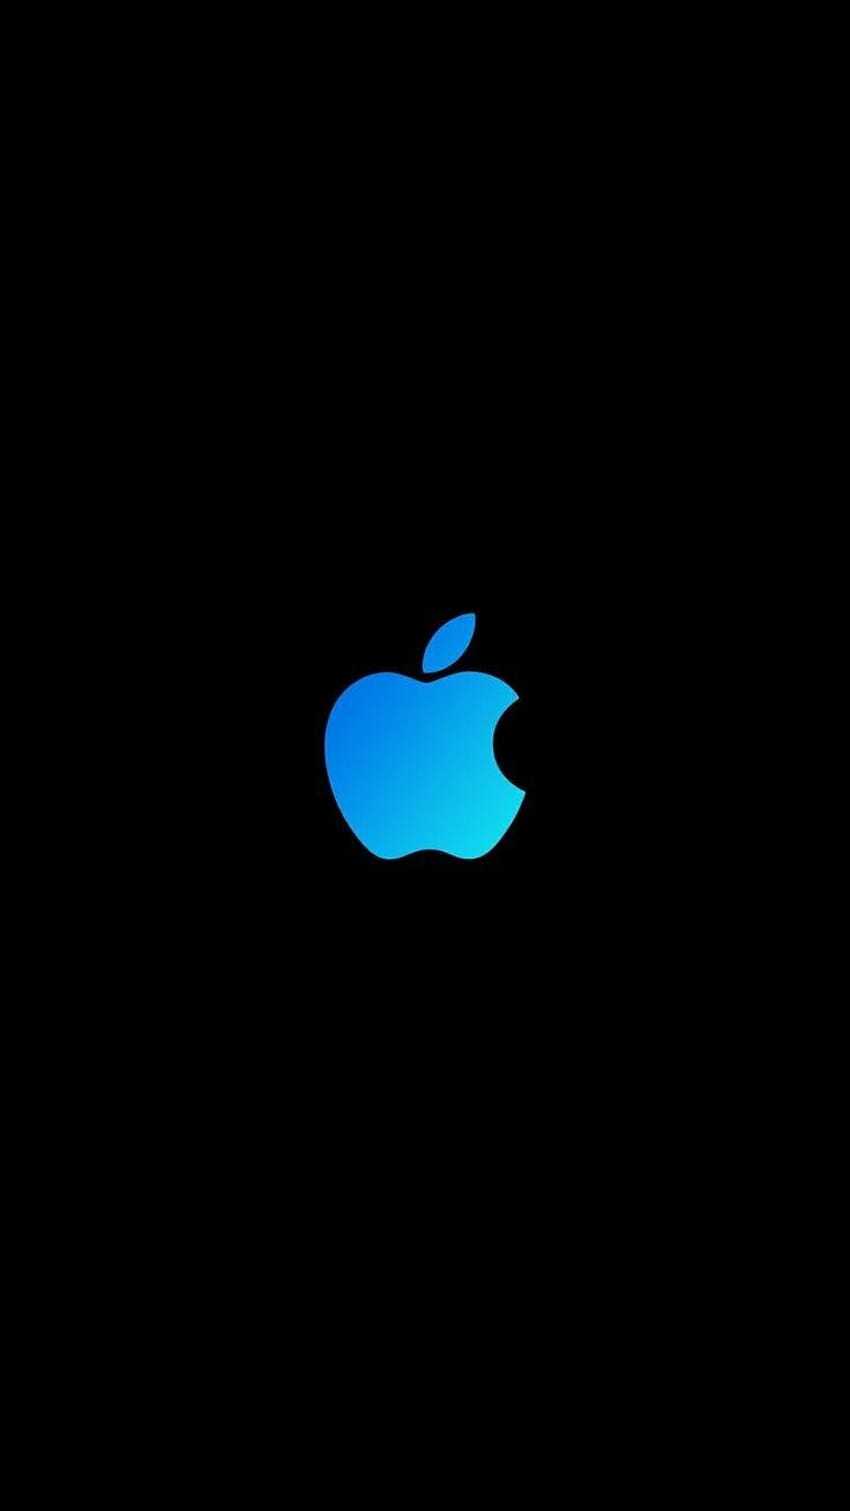 iOS oscuro 14 para iphone 12 pro max, logotipo de apple iphone 12 pro max fondo de pantalla del teléfono